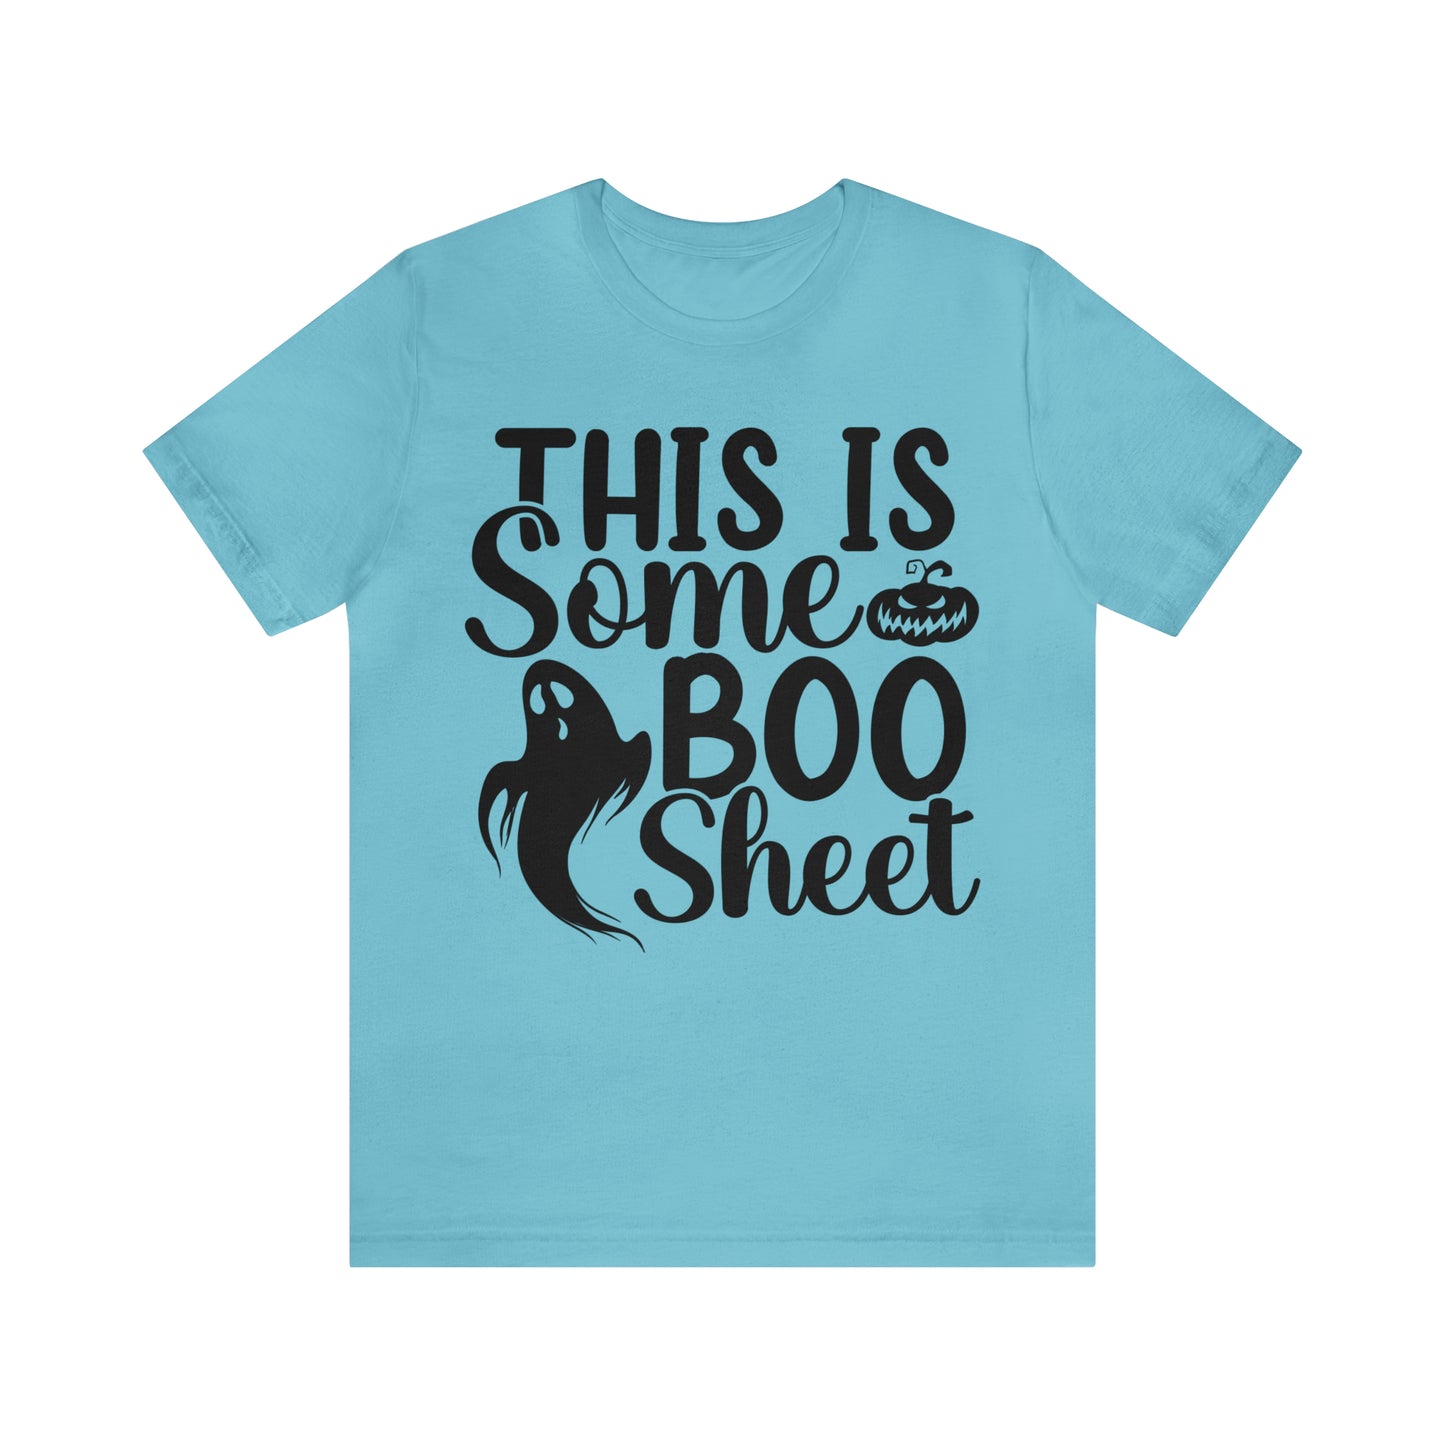 This Is Some Boo Sheet shirt, Boo Sheet Shirt, Spooky Season Tee, Retro Halloween Kids Shirt, Funny Halloween Ghost Shirt, T653